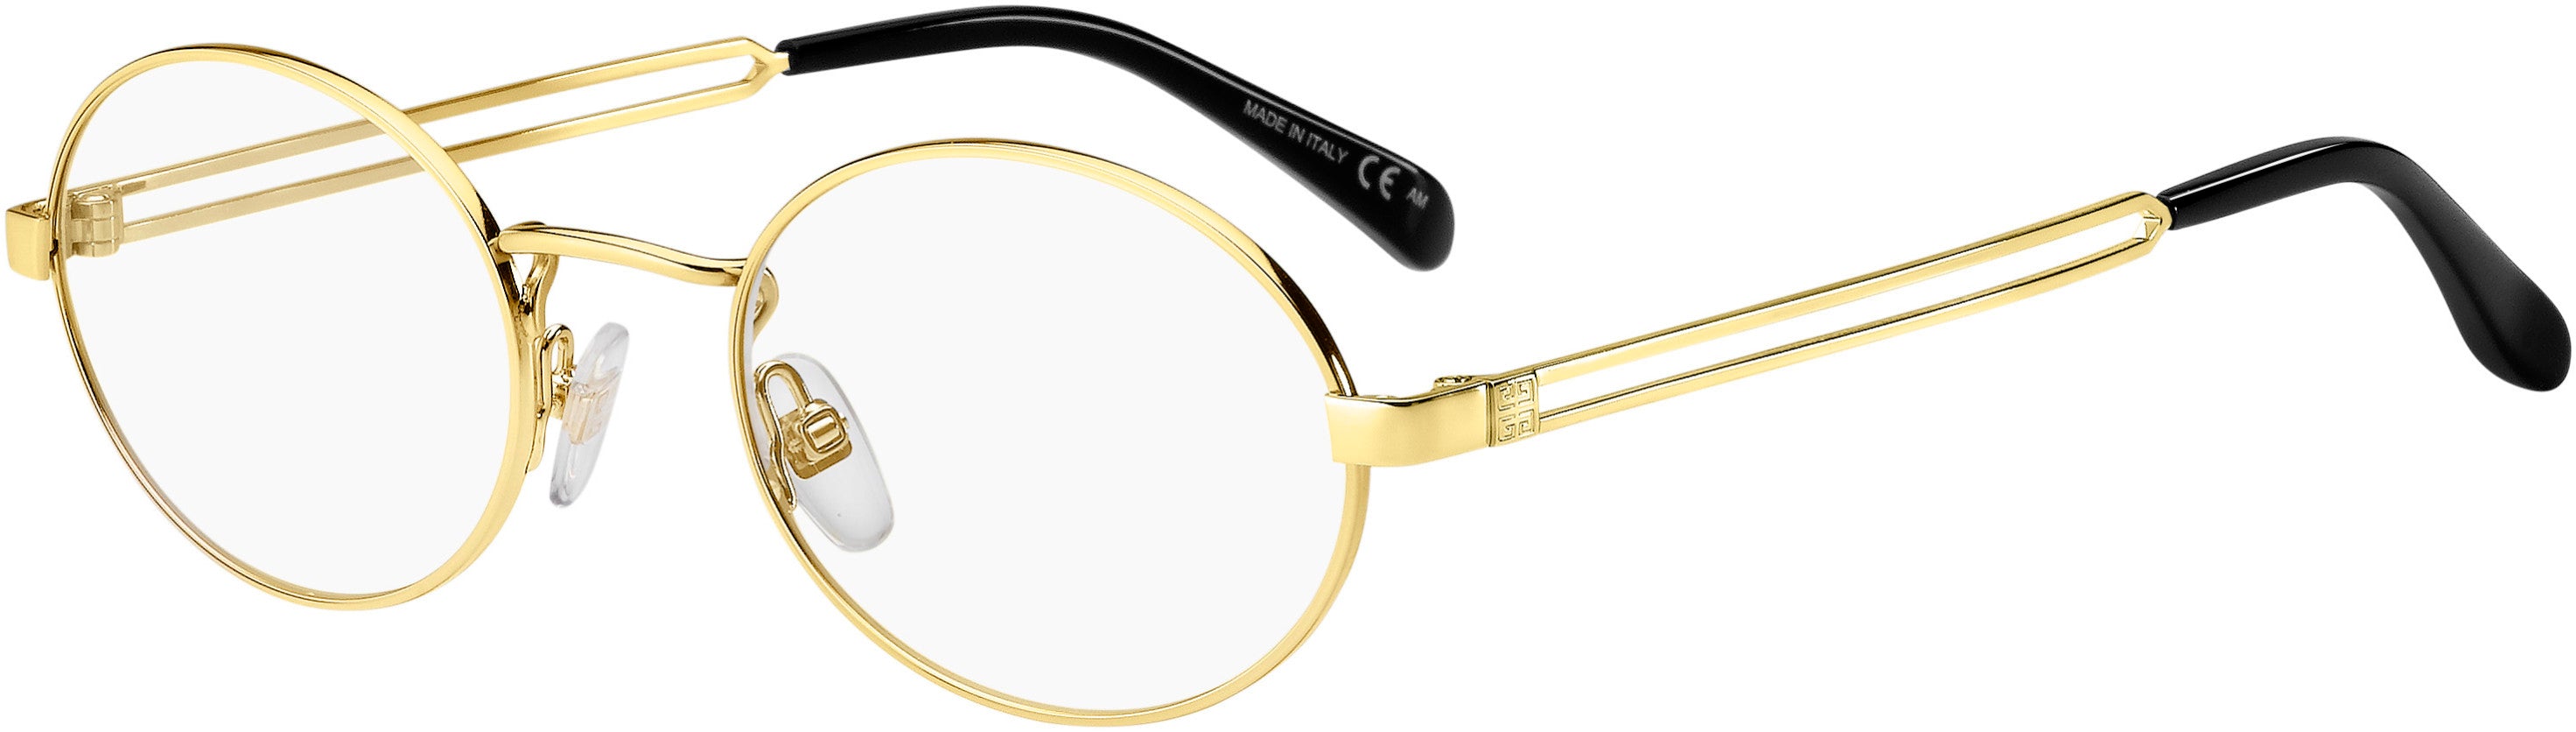  Givenchy 0108 Oval Modified Eyeglasses 0J5G-0J5G  Gold (00 Demo Lens)